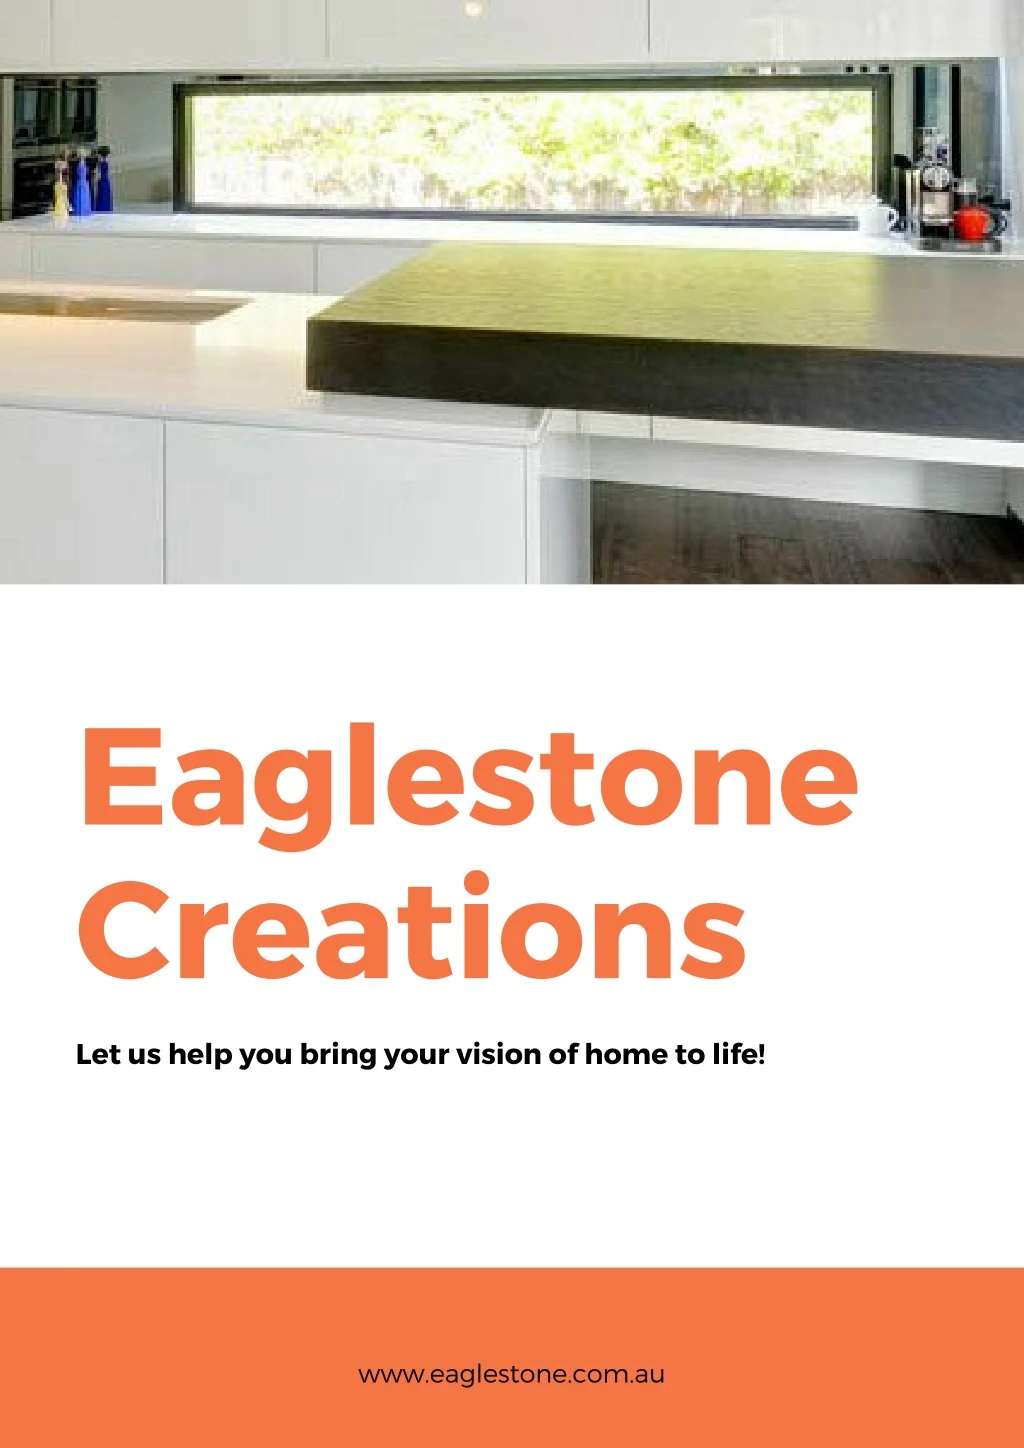 eaglestone creations